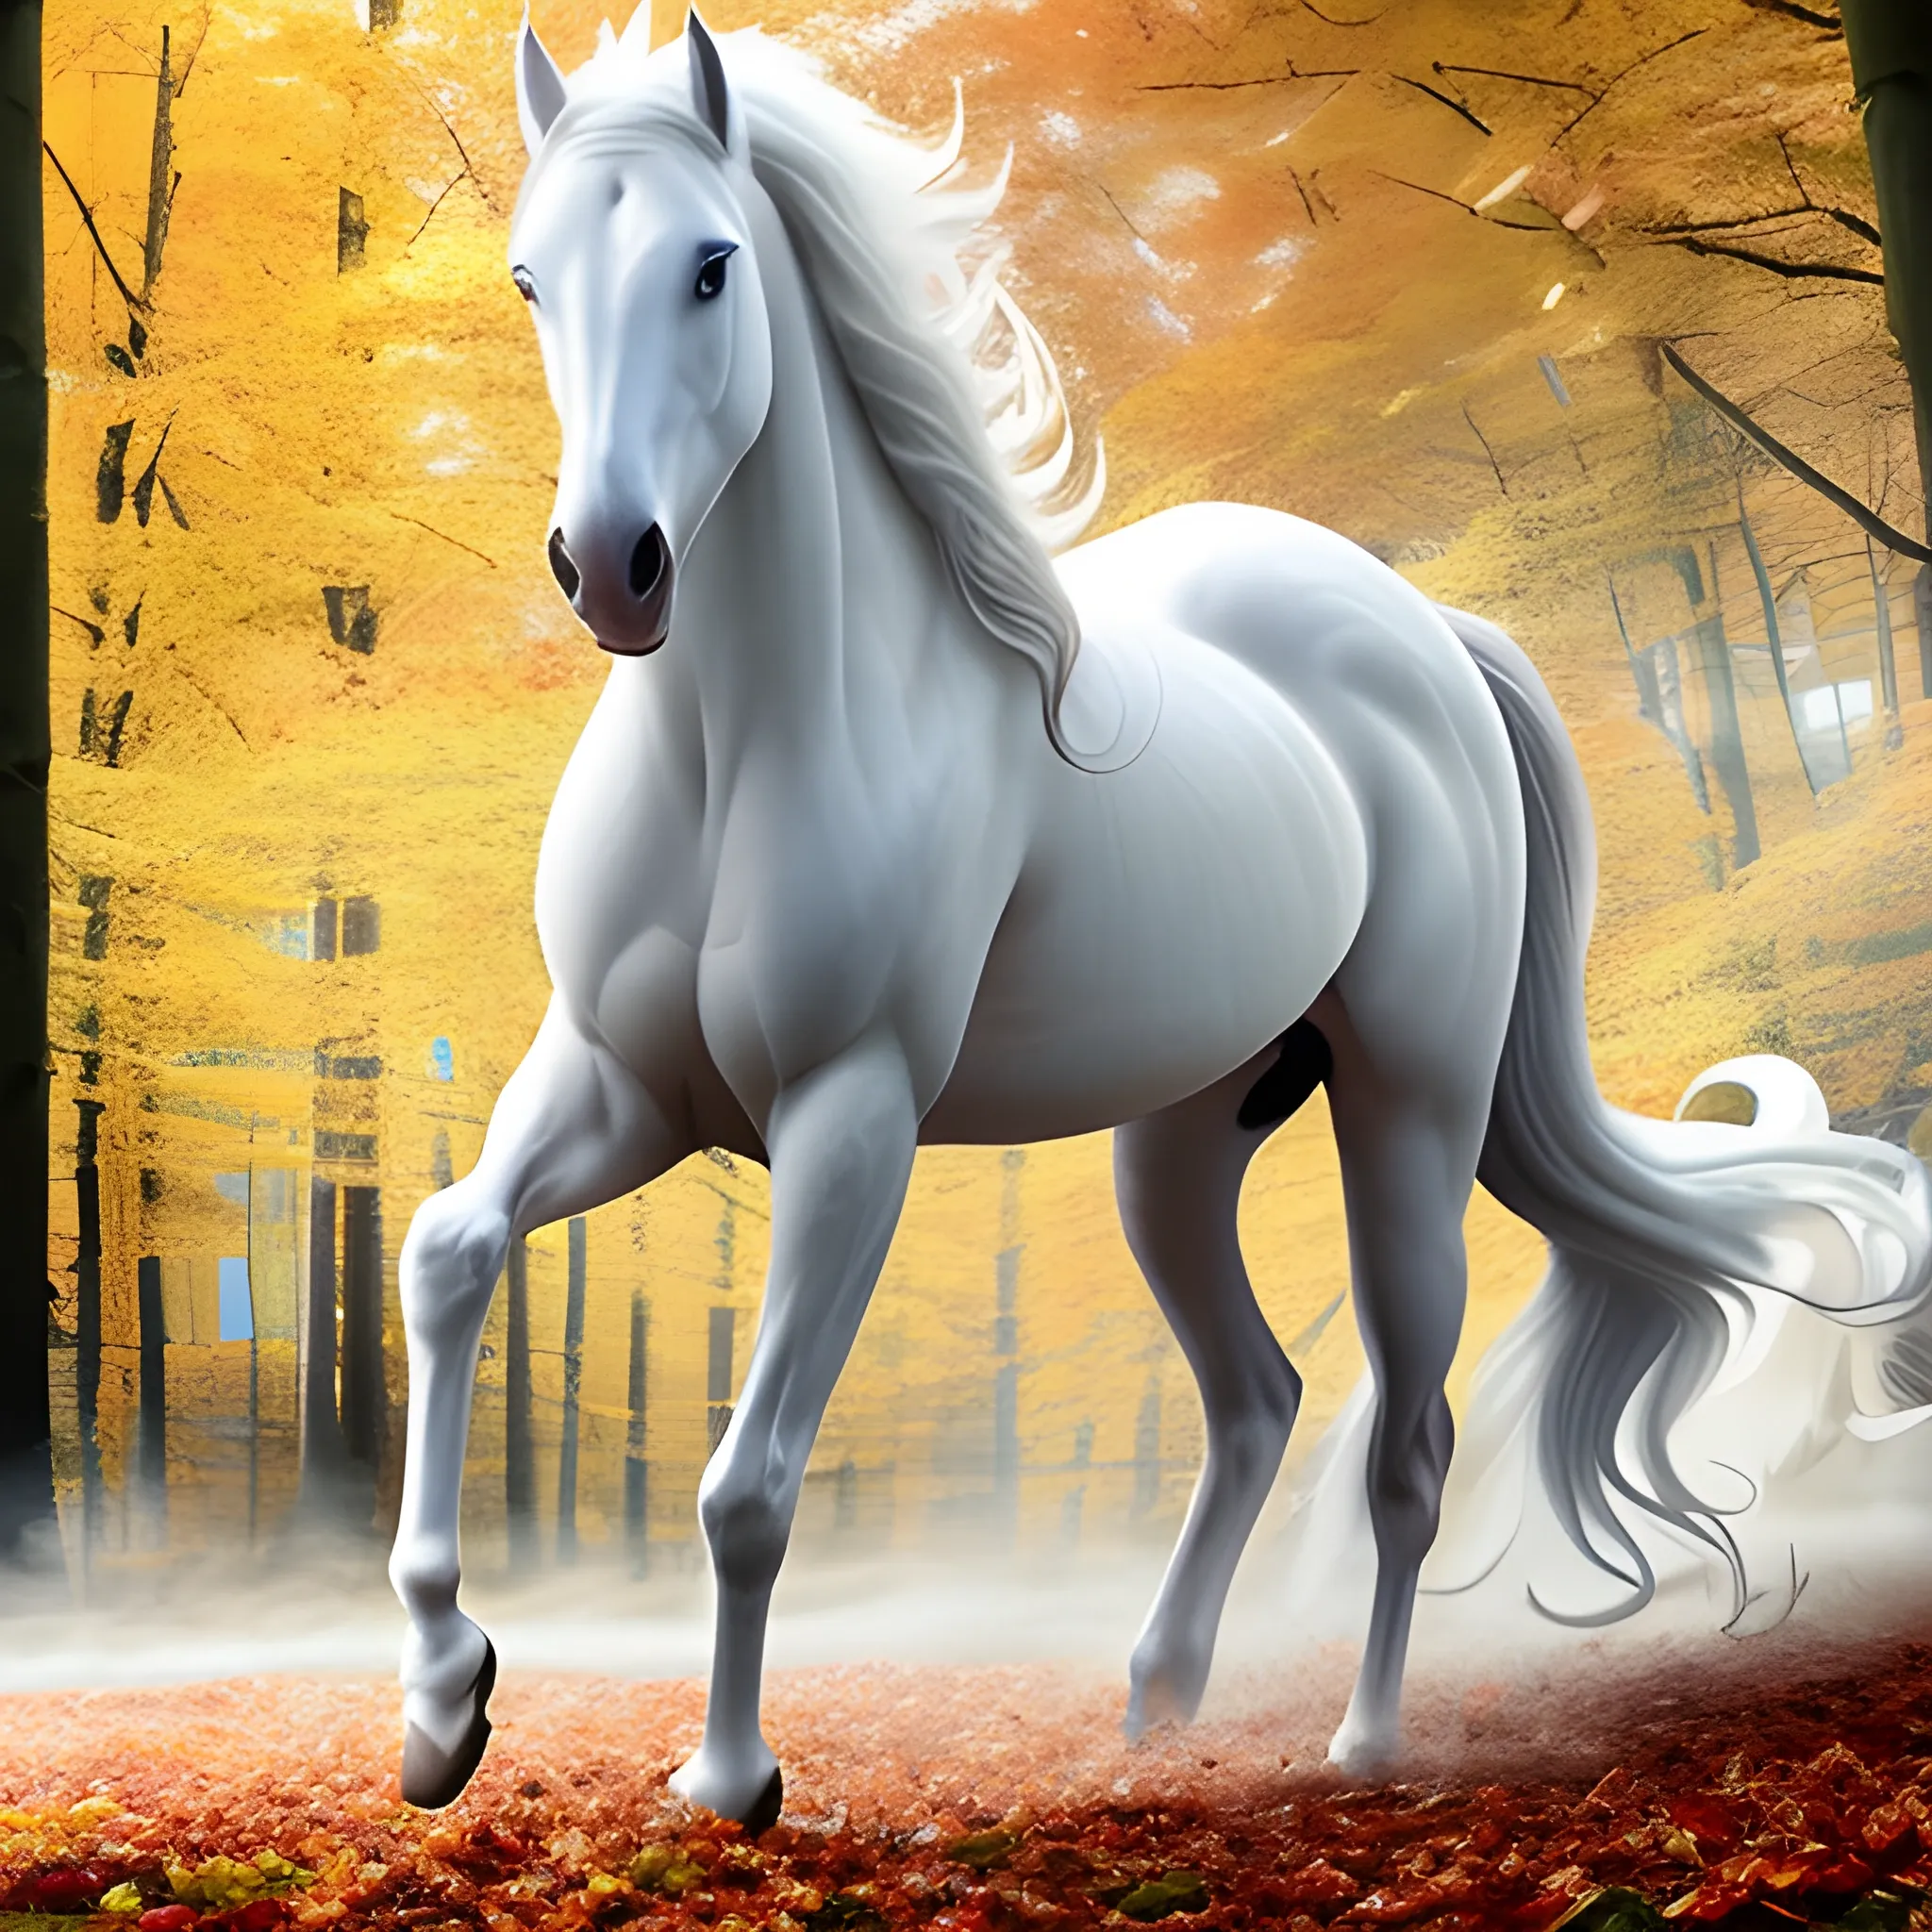 The Long Hair Beautiful White Horse